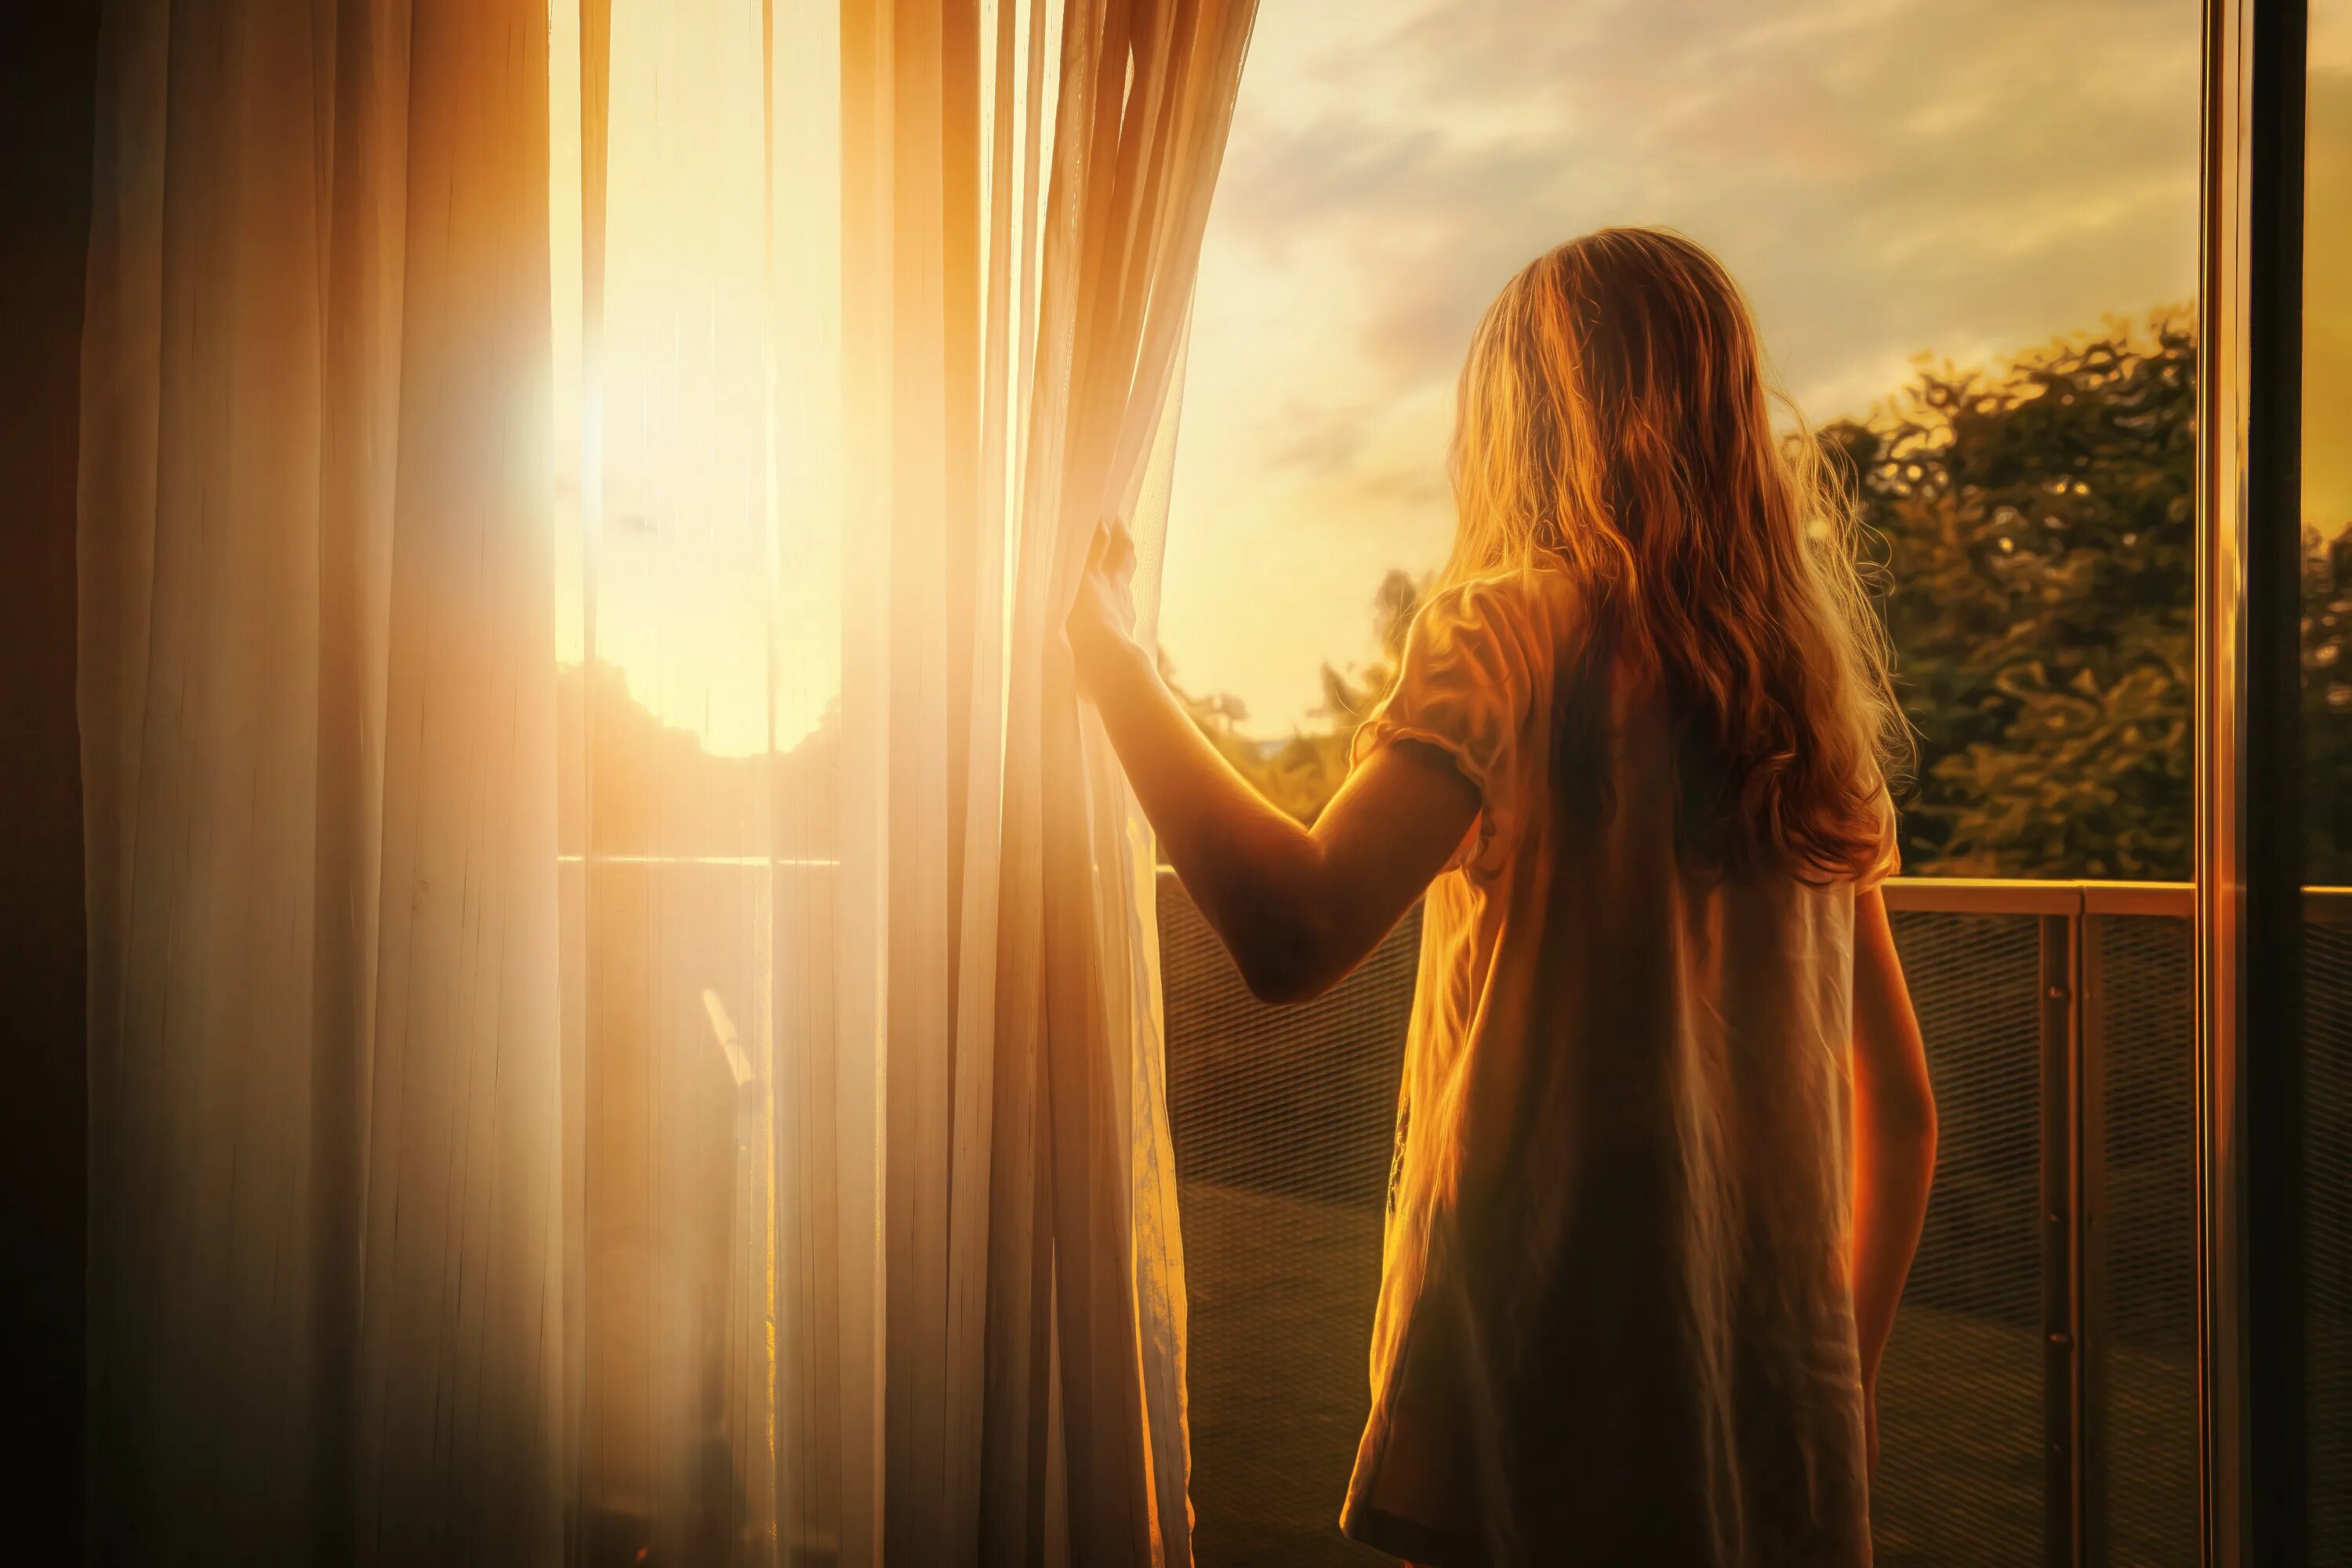 Стояло раннее утро солнце освещало. Девушка на рассвете. Девушка в солнечных лучах. Девушка и солнце. У окна.